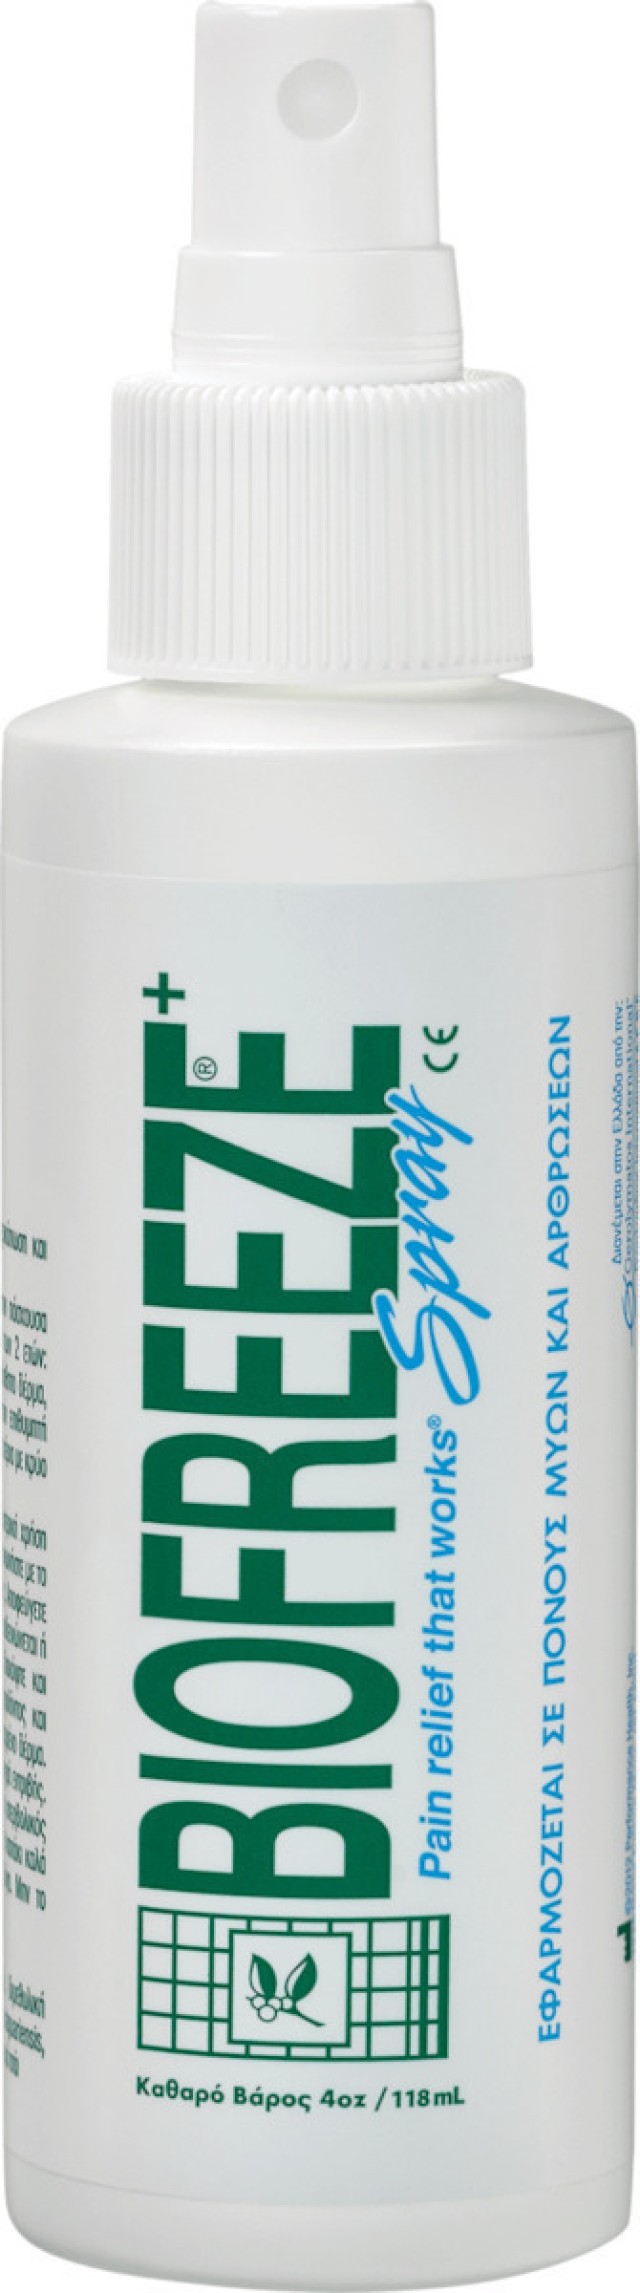 Biofreeze Spray, Αναλγητικό Σπρέι Κρυοθεραπείας για Μυϊκούς και Σωματικούς Πόνους 118ml